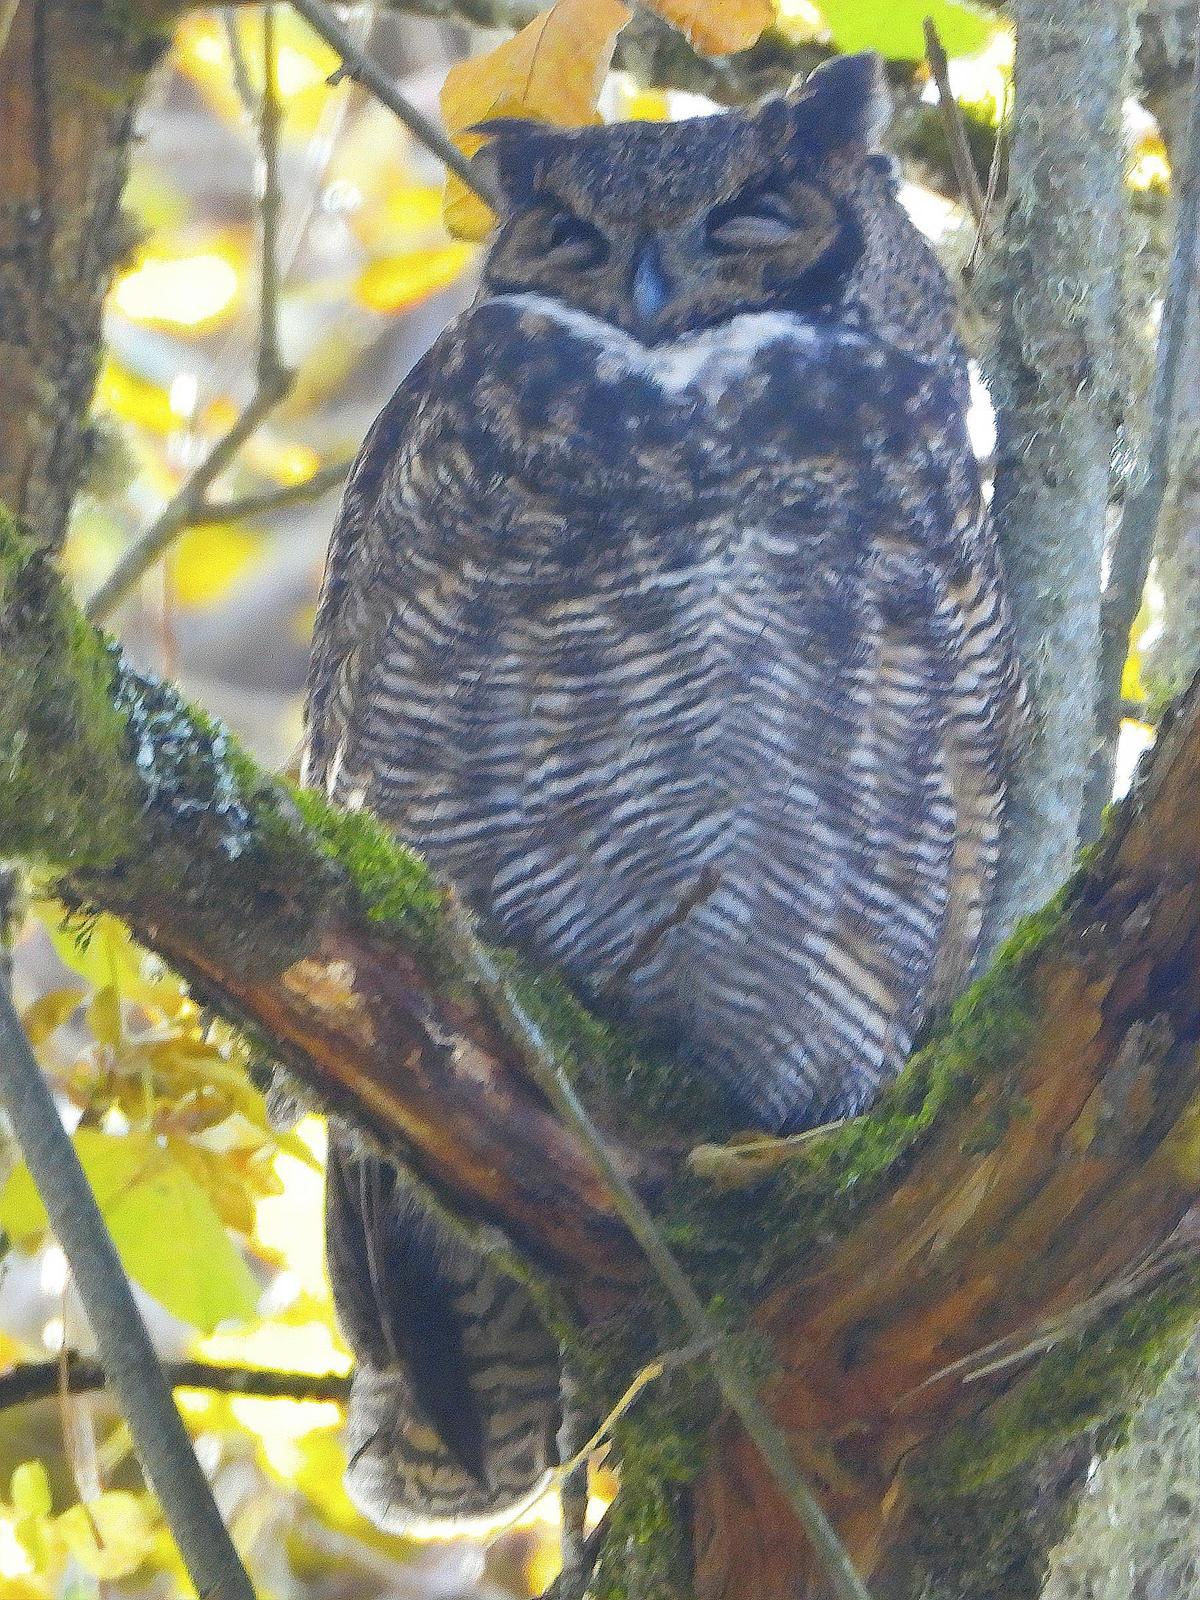 Great Horned Owl Photo by Dan Tallman